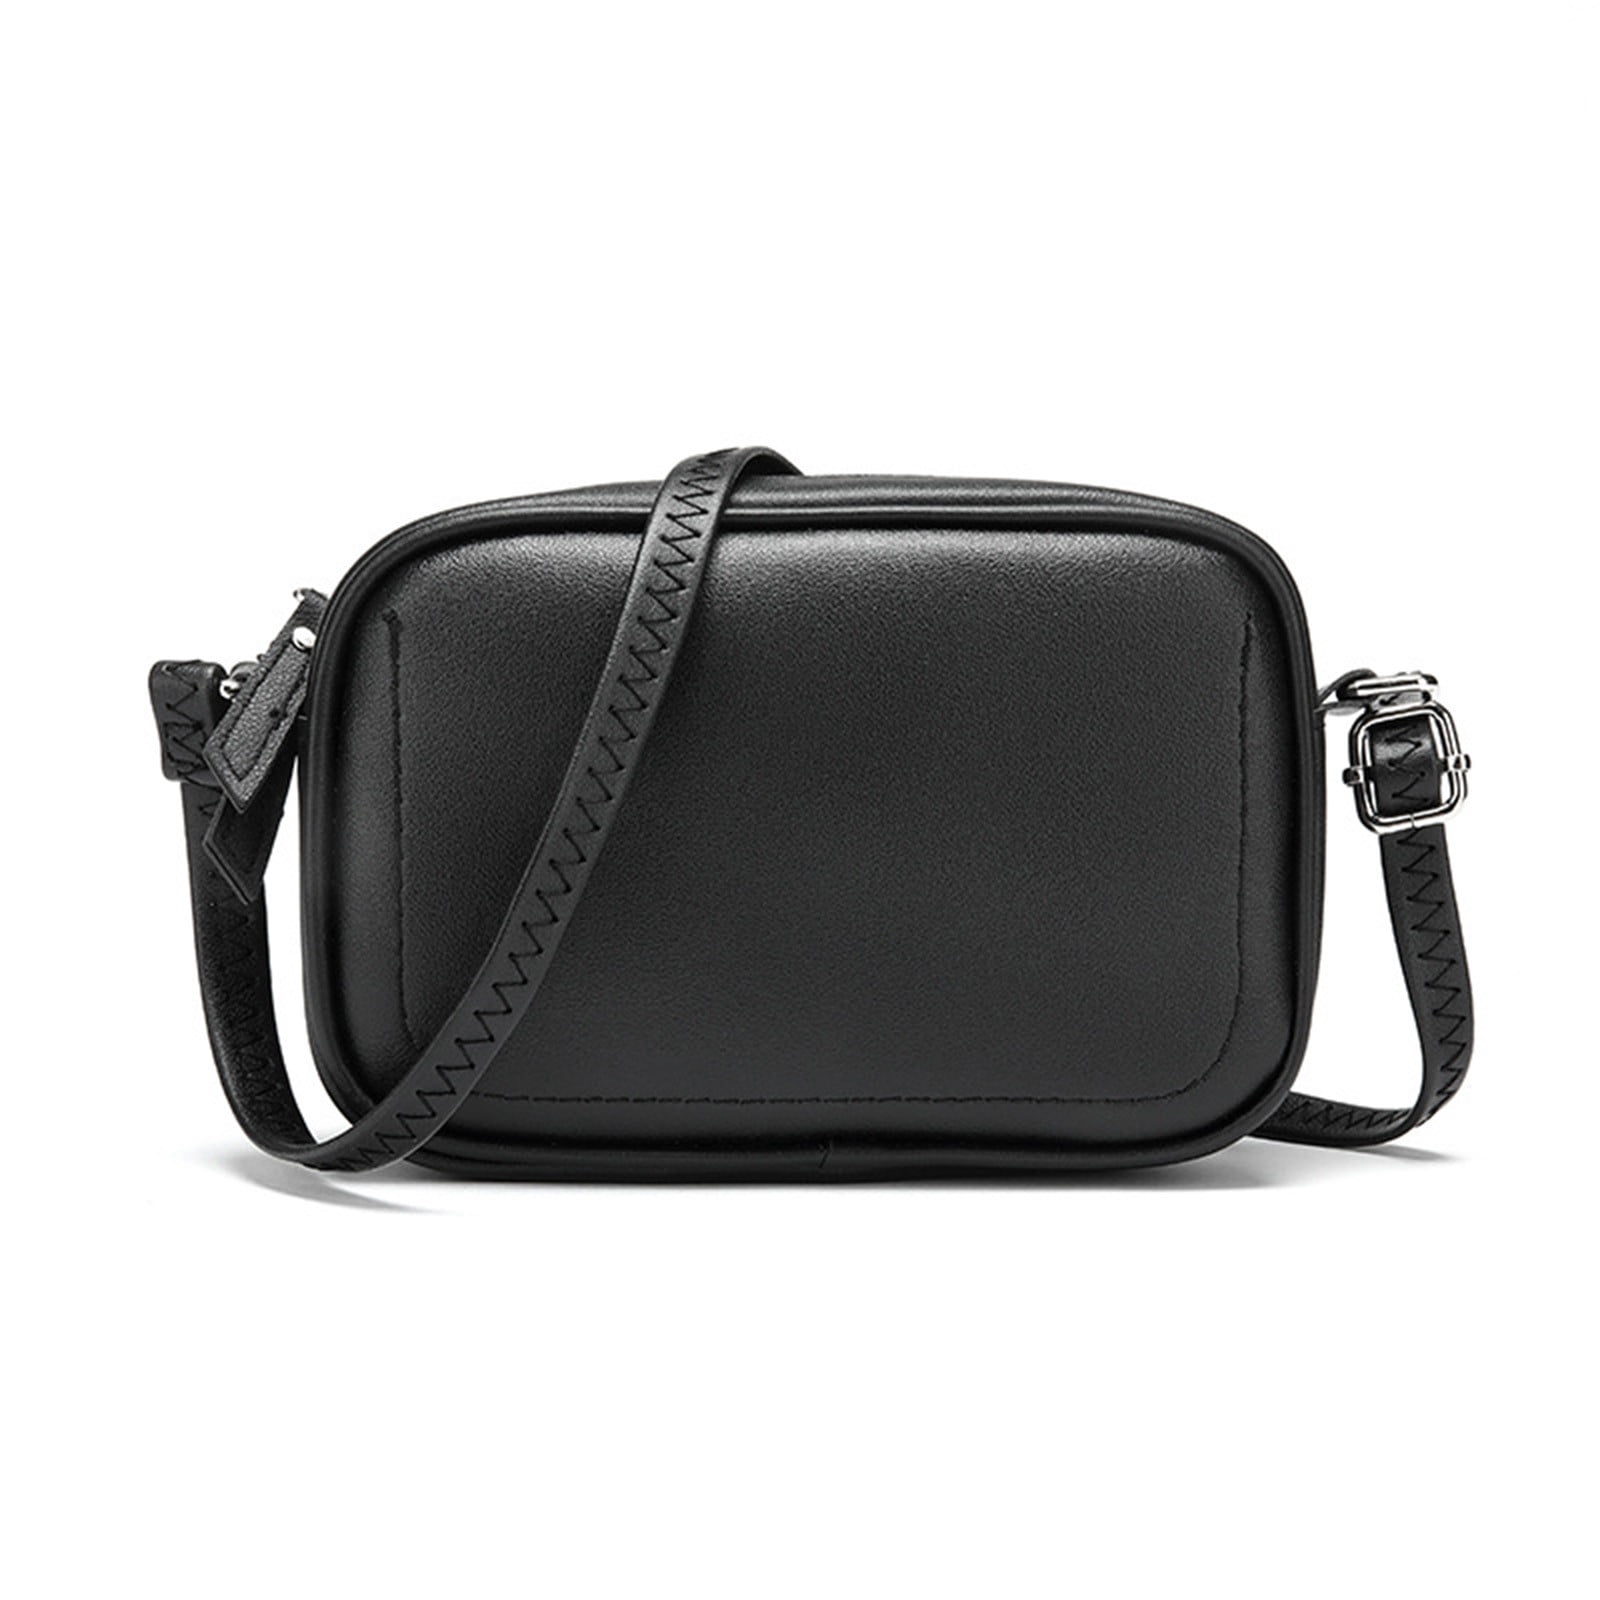 Zhaghmin Brahmin Handbags Clearance Unisex Large Capacity Bag Fashion Portable Canvas Bag Shoulder Bag Messenger Bag Shoulder Bag Shoulder Bag for